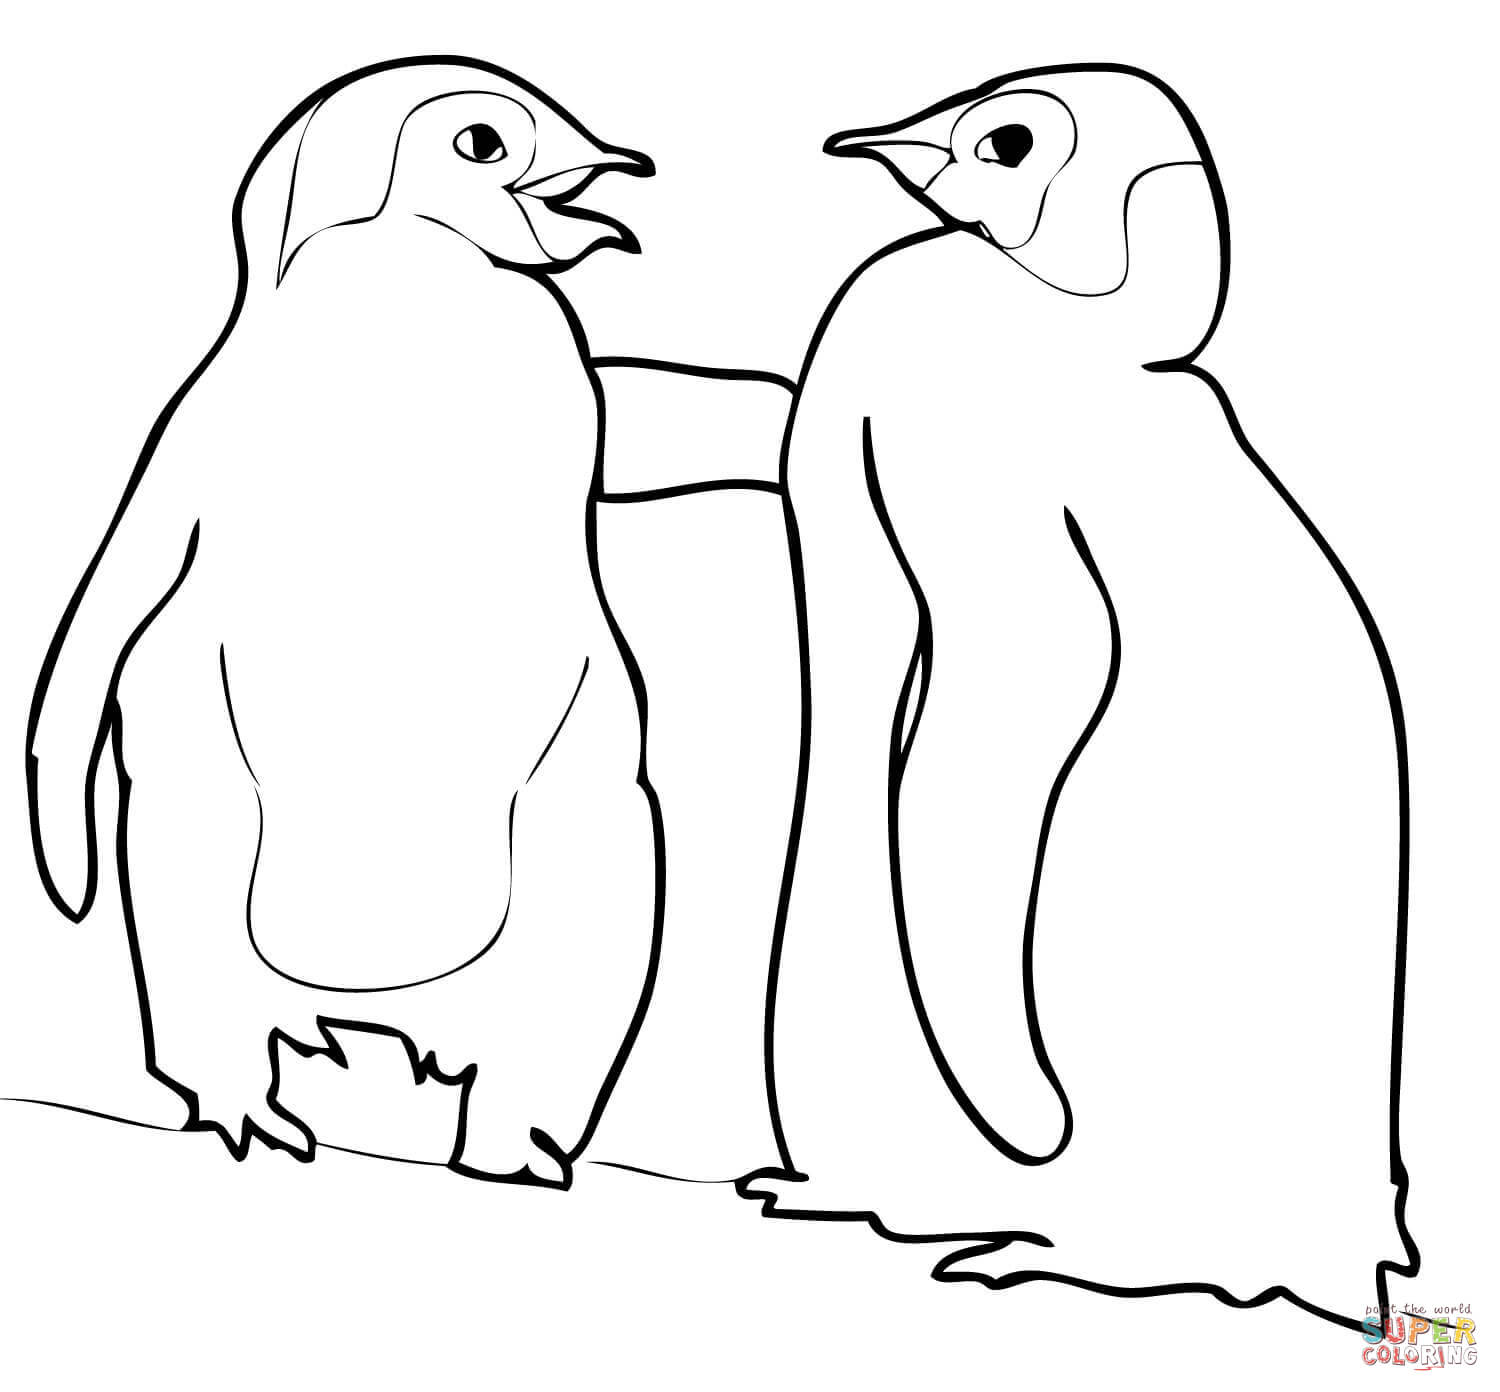 King Emperor Penguins coloring #18, Download drawings